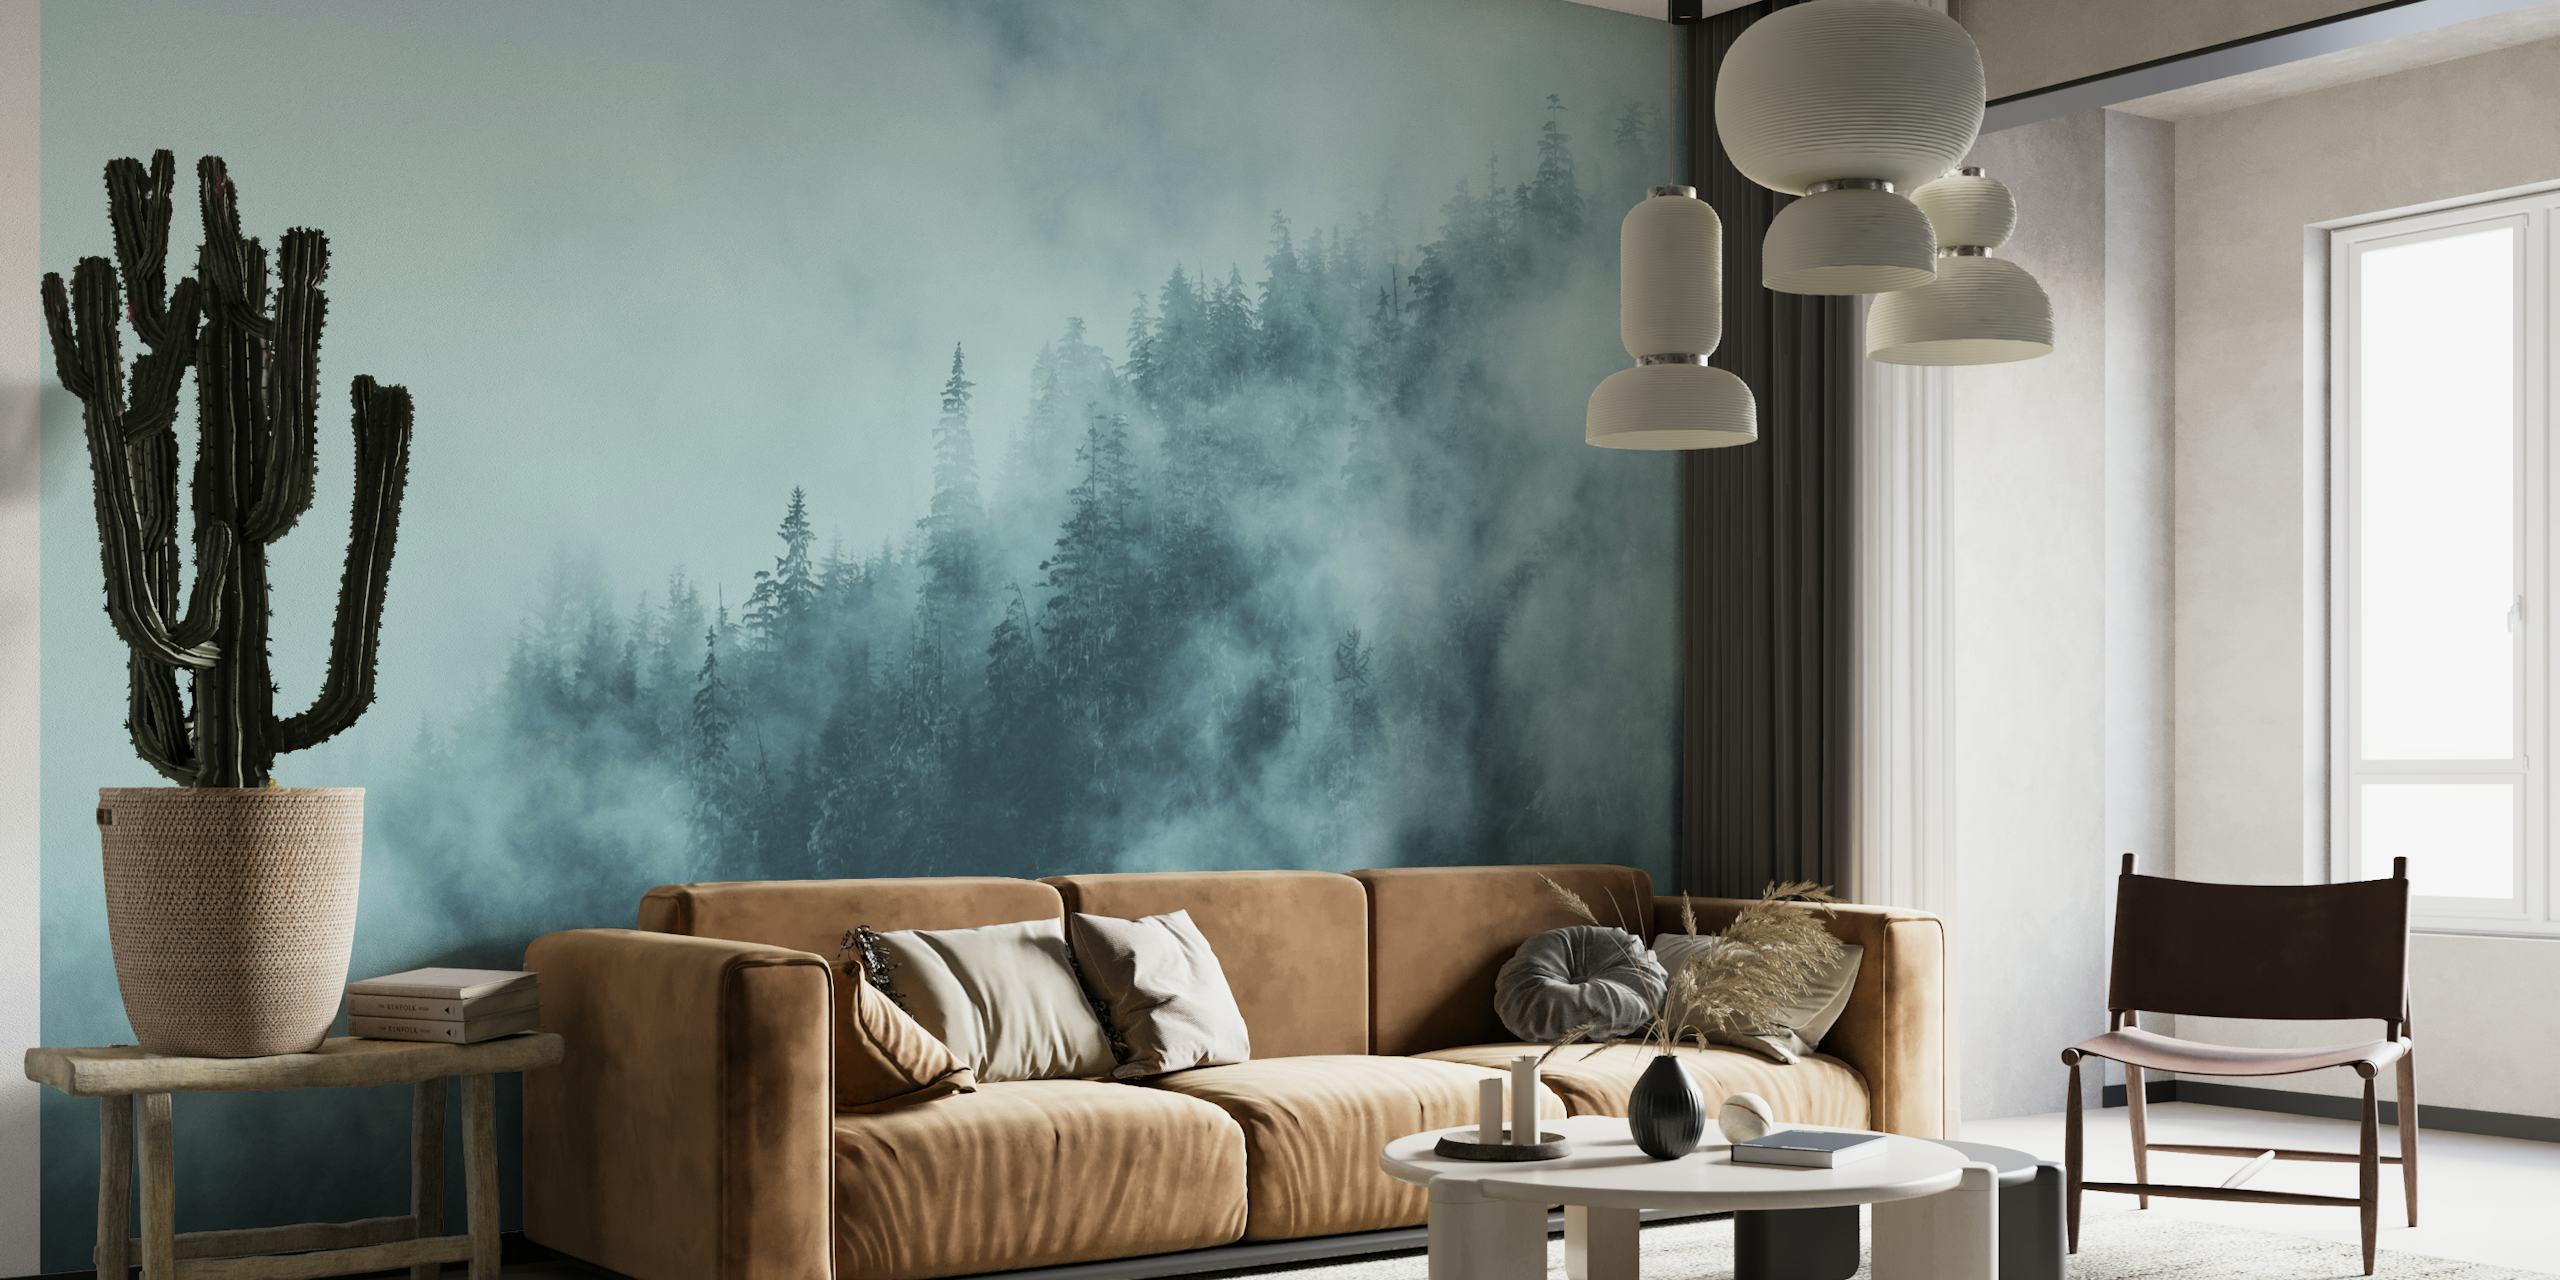 Foggy Forest Blue zidna slika sa siluetama drveća u magli